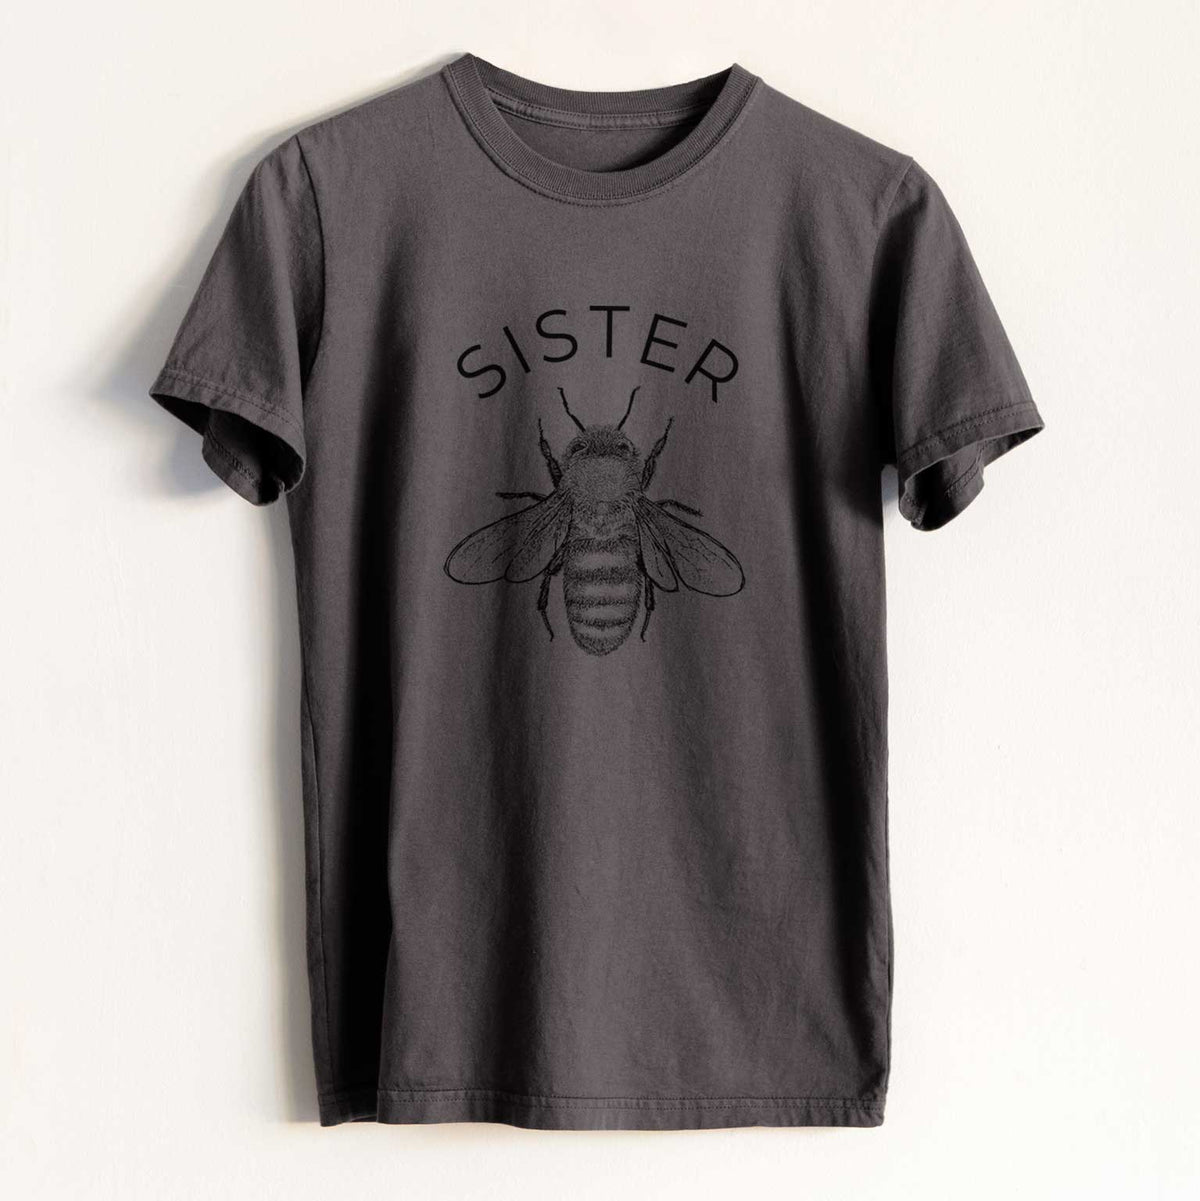 Sister Bee - Heavyweight Men&#39;s 100% Organic Cotton Tee